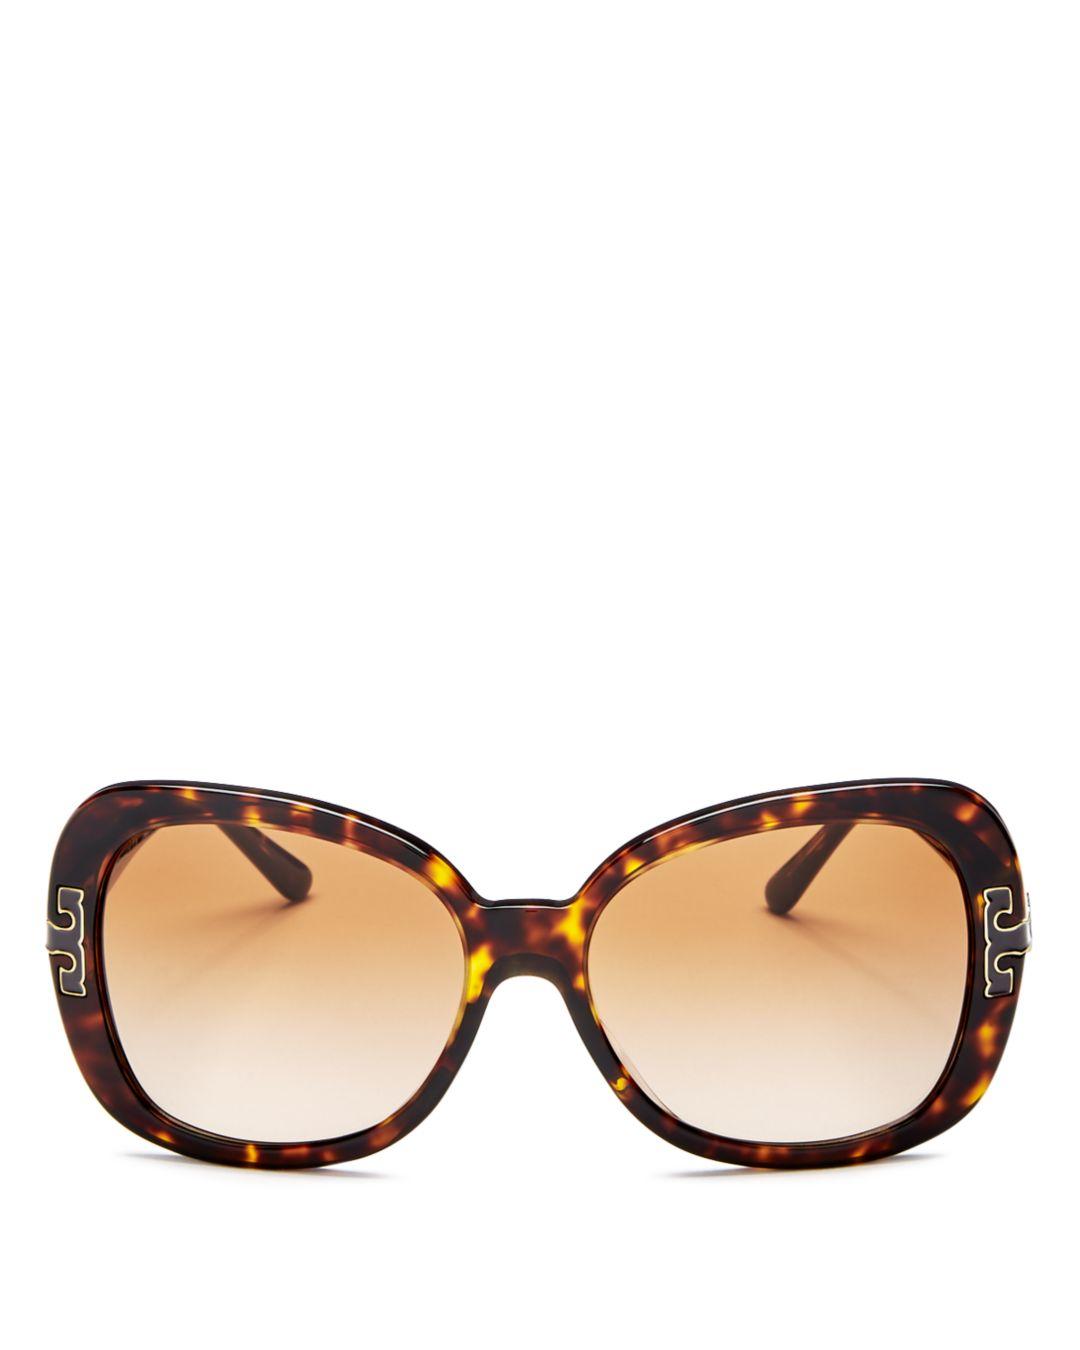 Tory Burch Women's Butterfly Sunglasses in Brown - Lyst